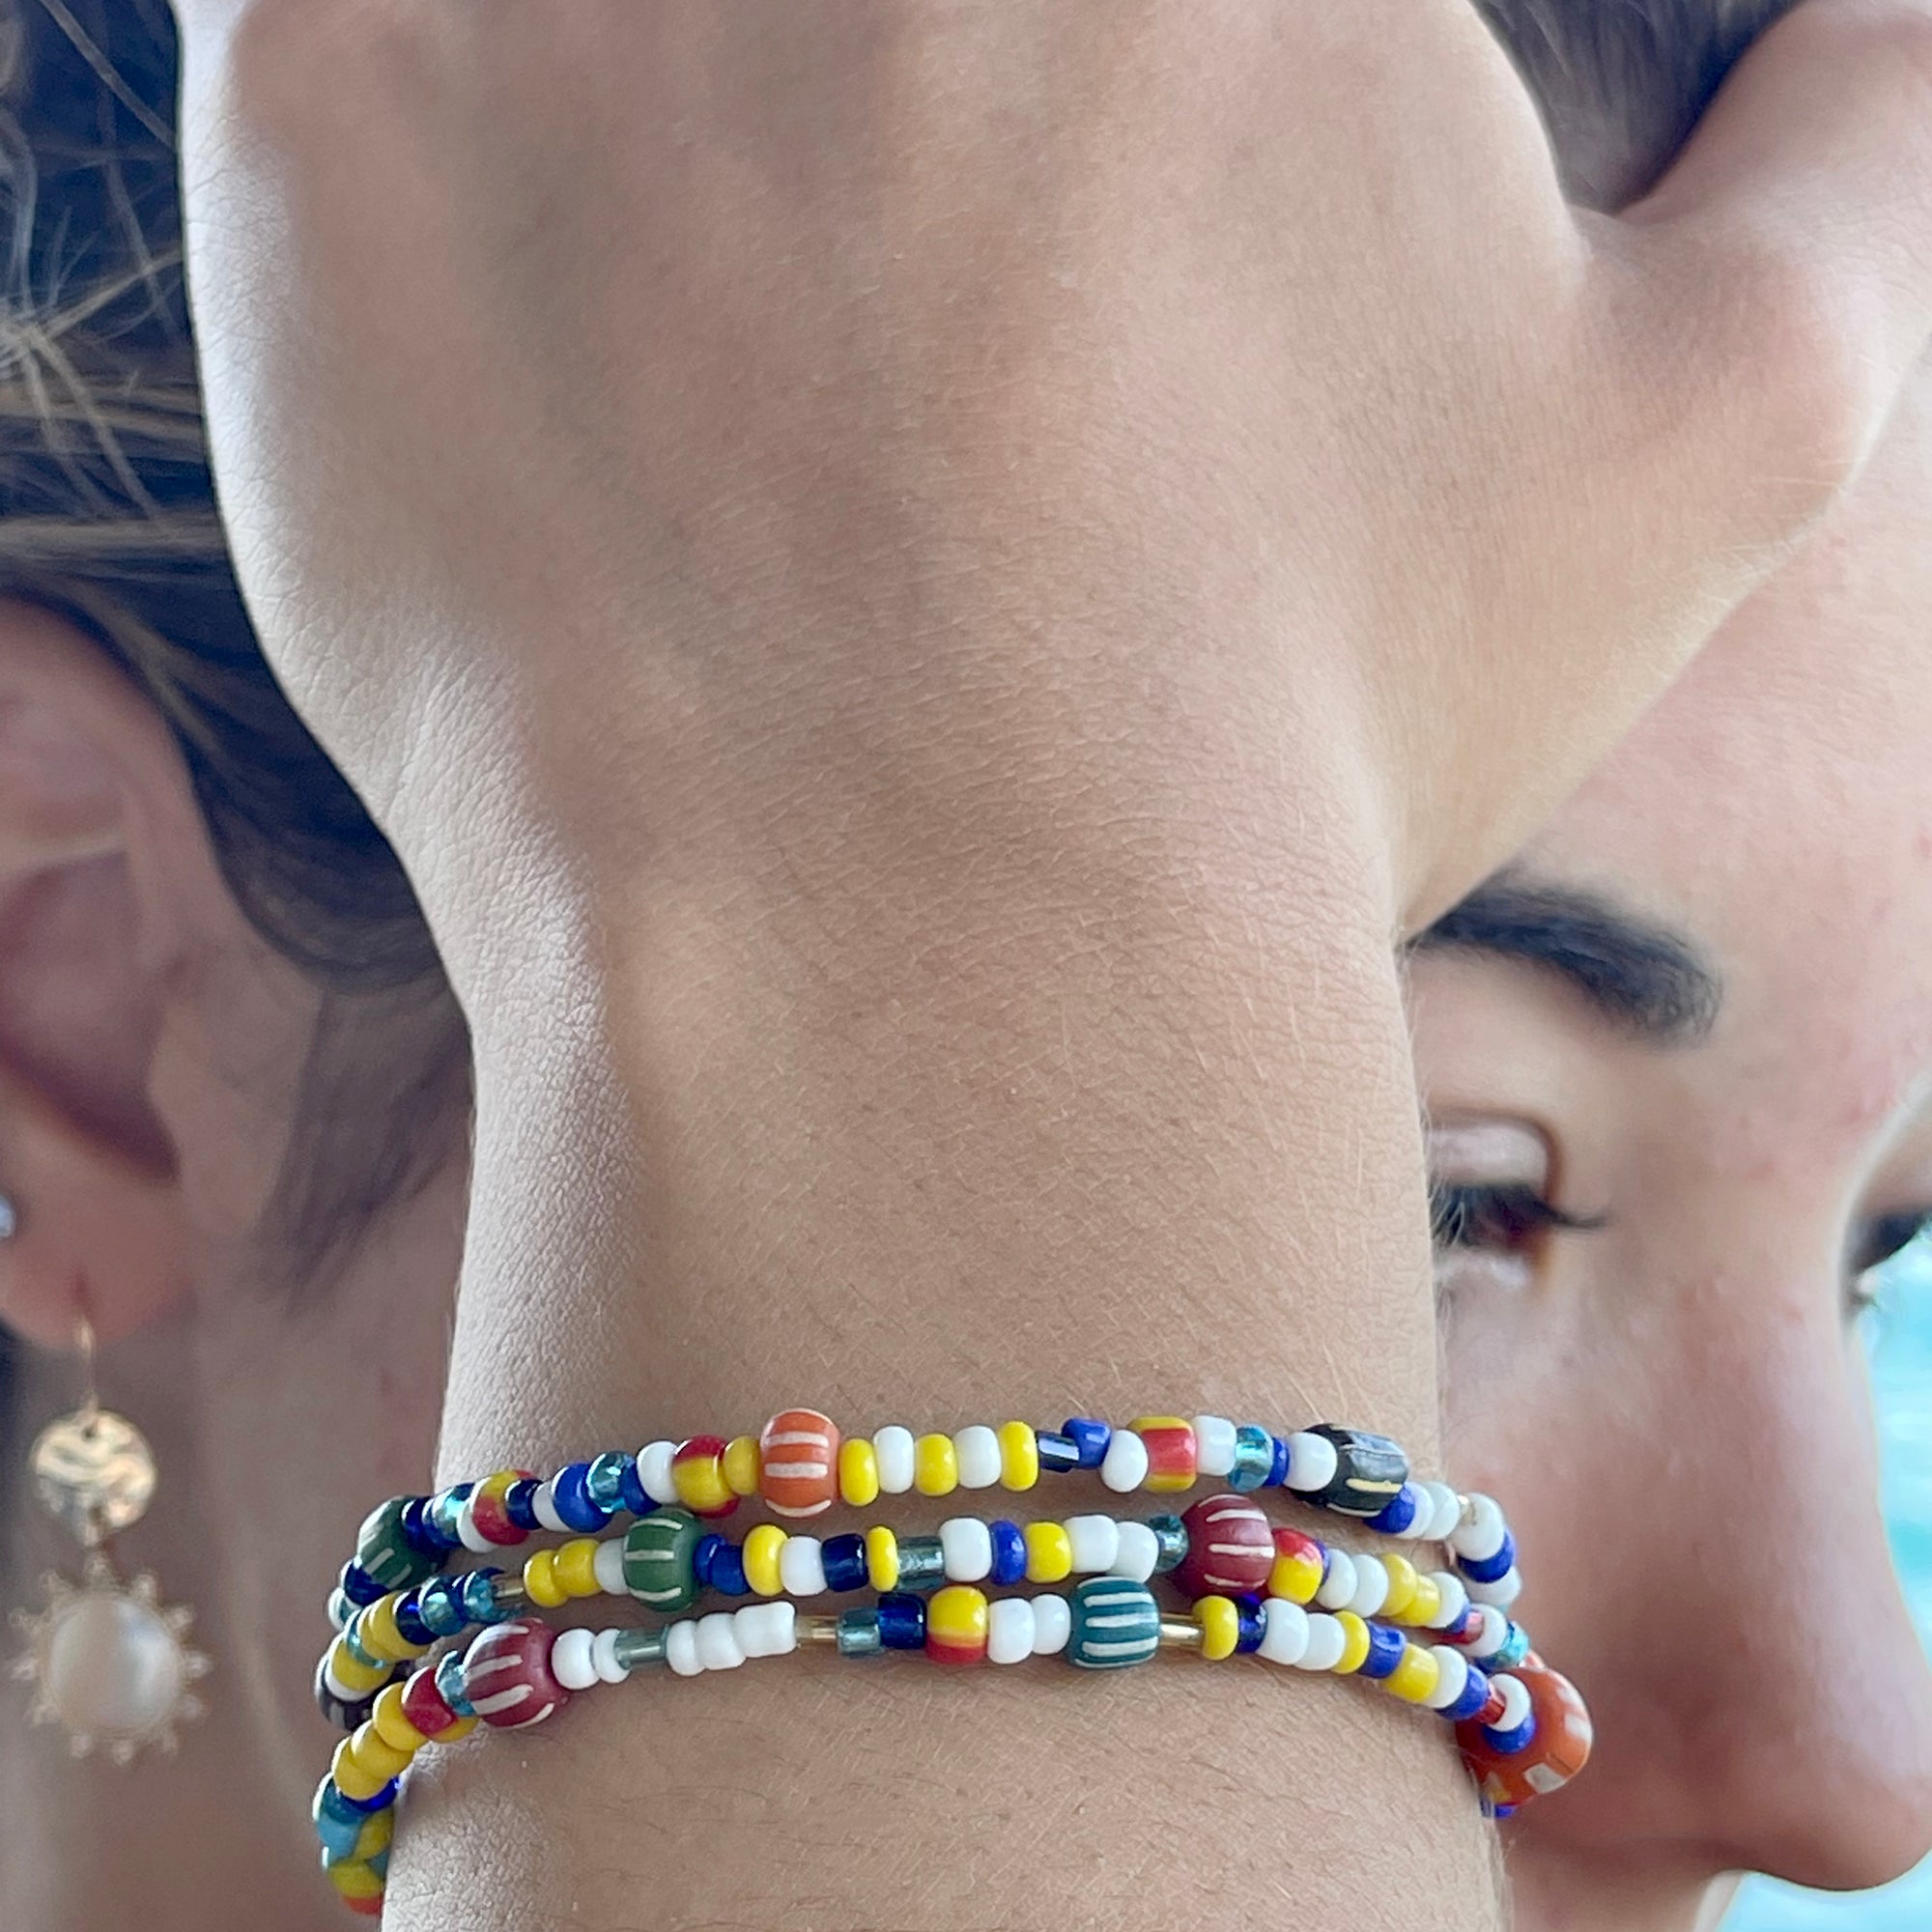 NEW! Trendy Beaded Bracelet in Italian Colors!